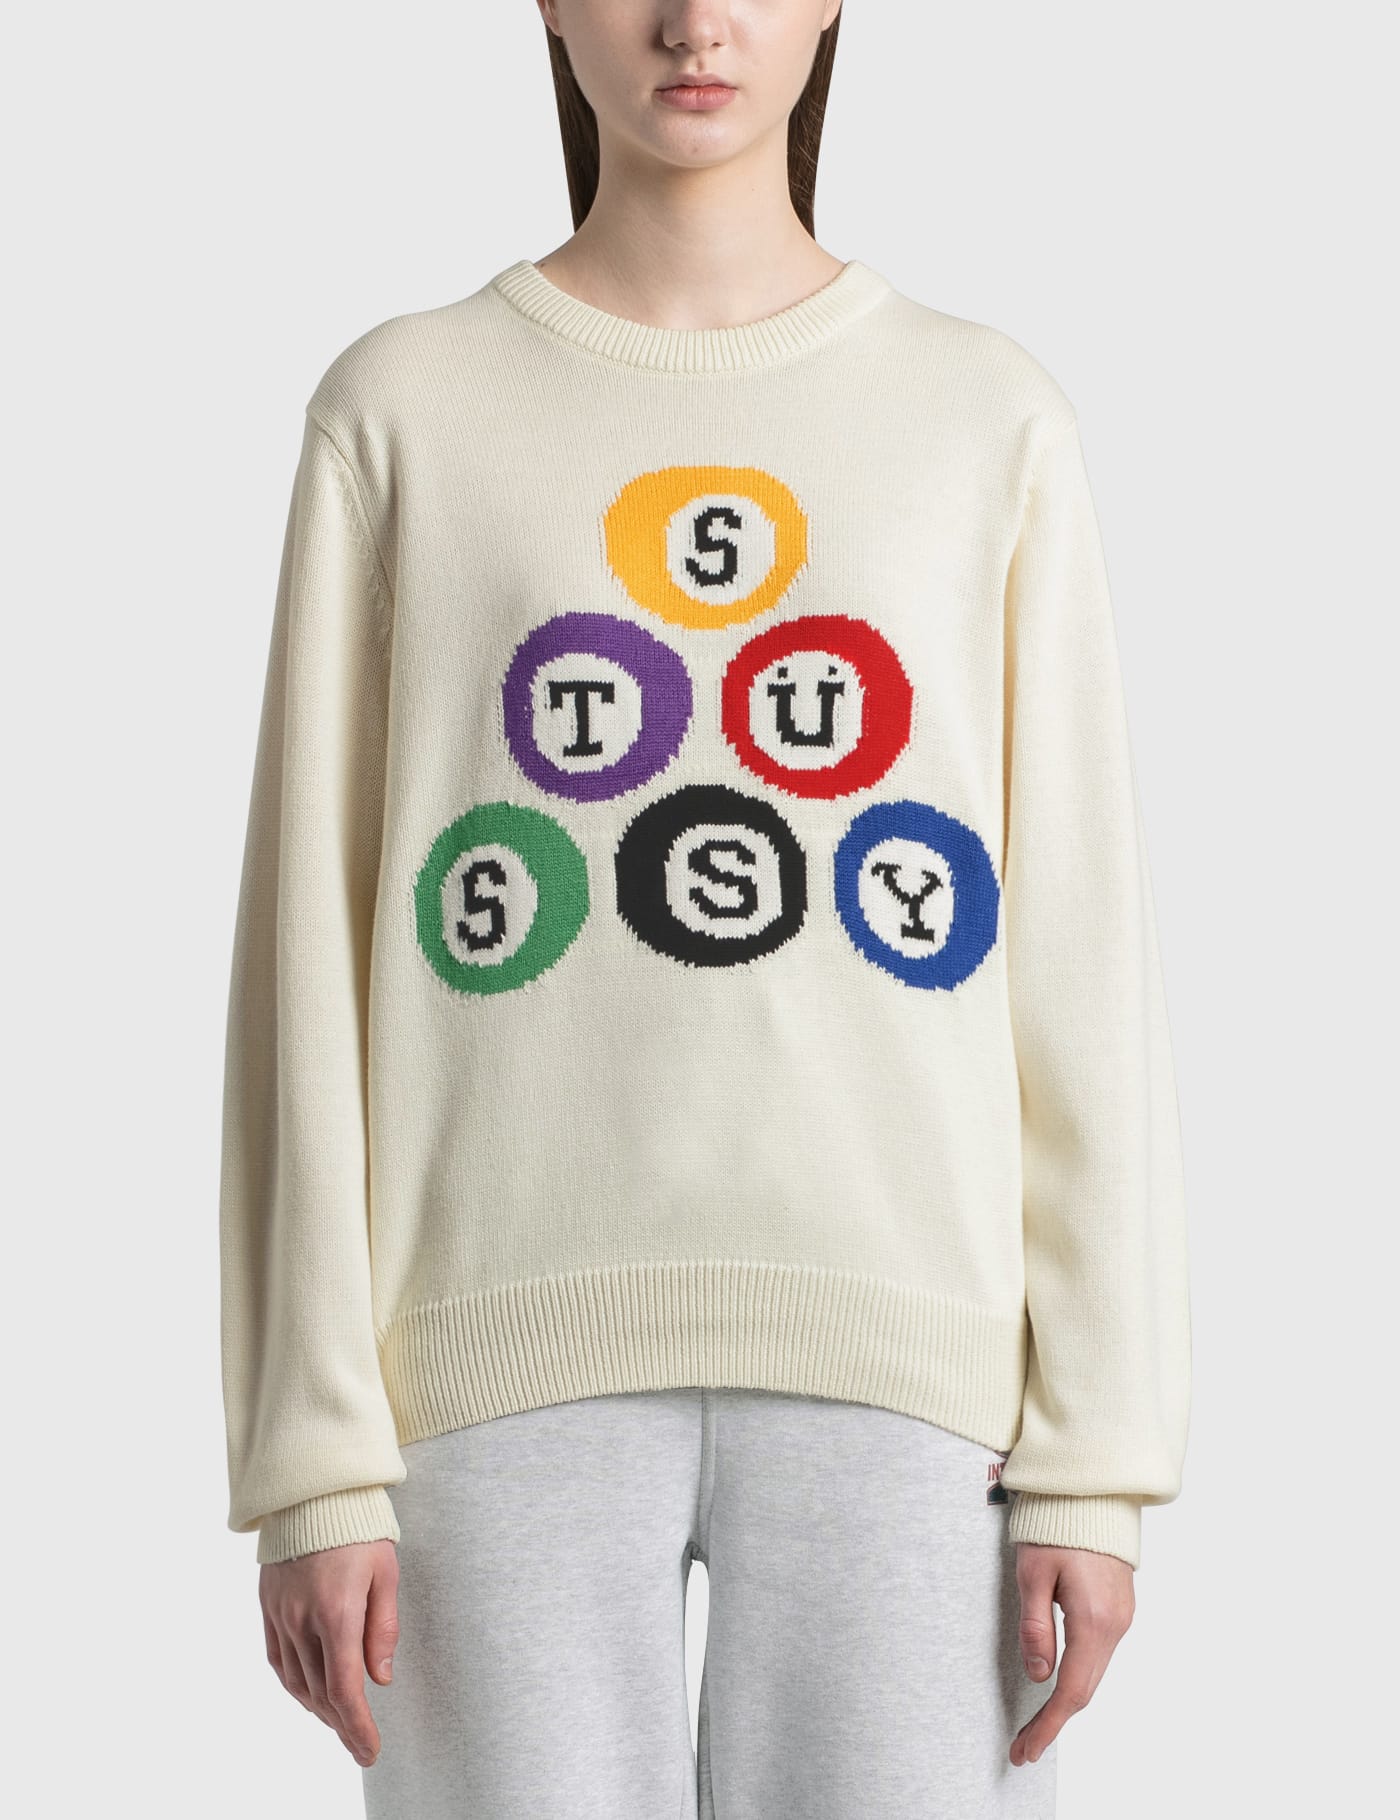 Stüssy - Stussy Billiard Sweater | HBX - HYPEBEAST 為您搜羅全球